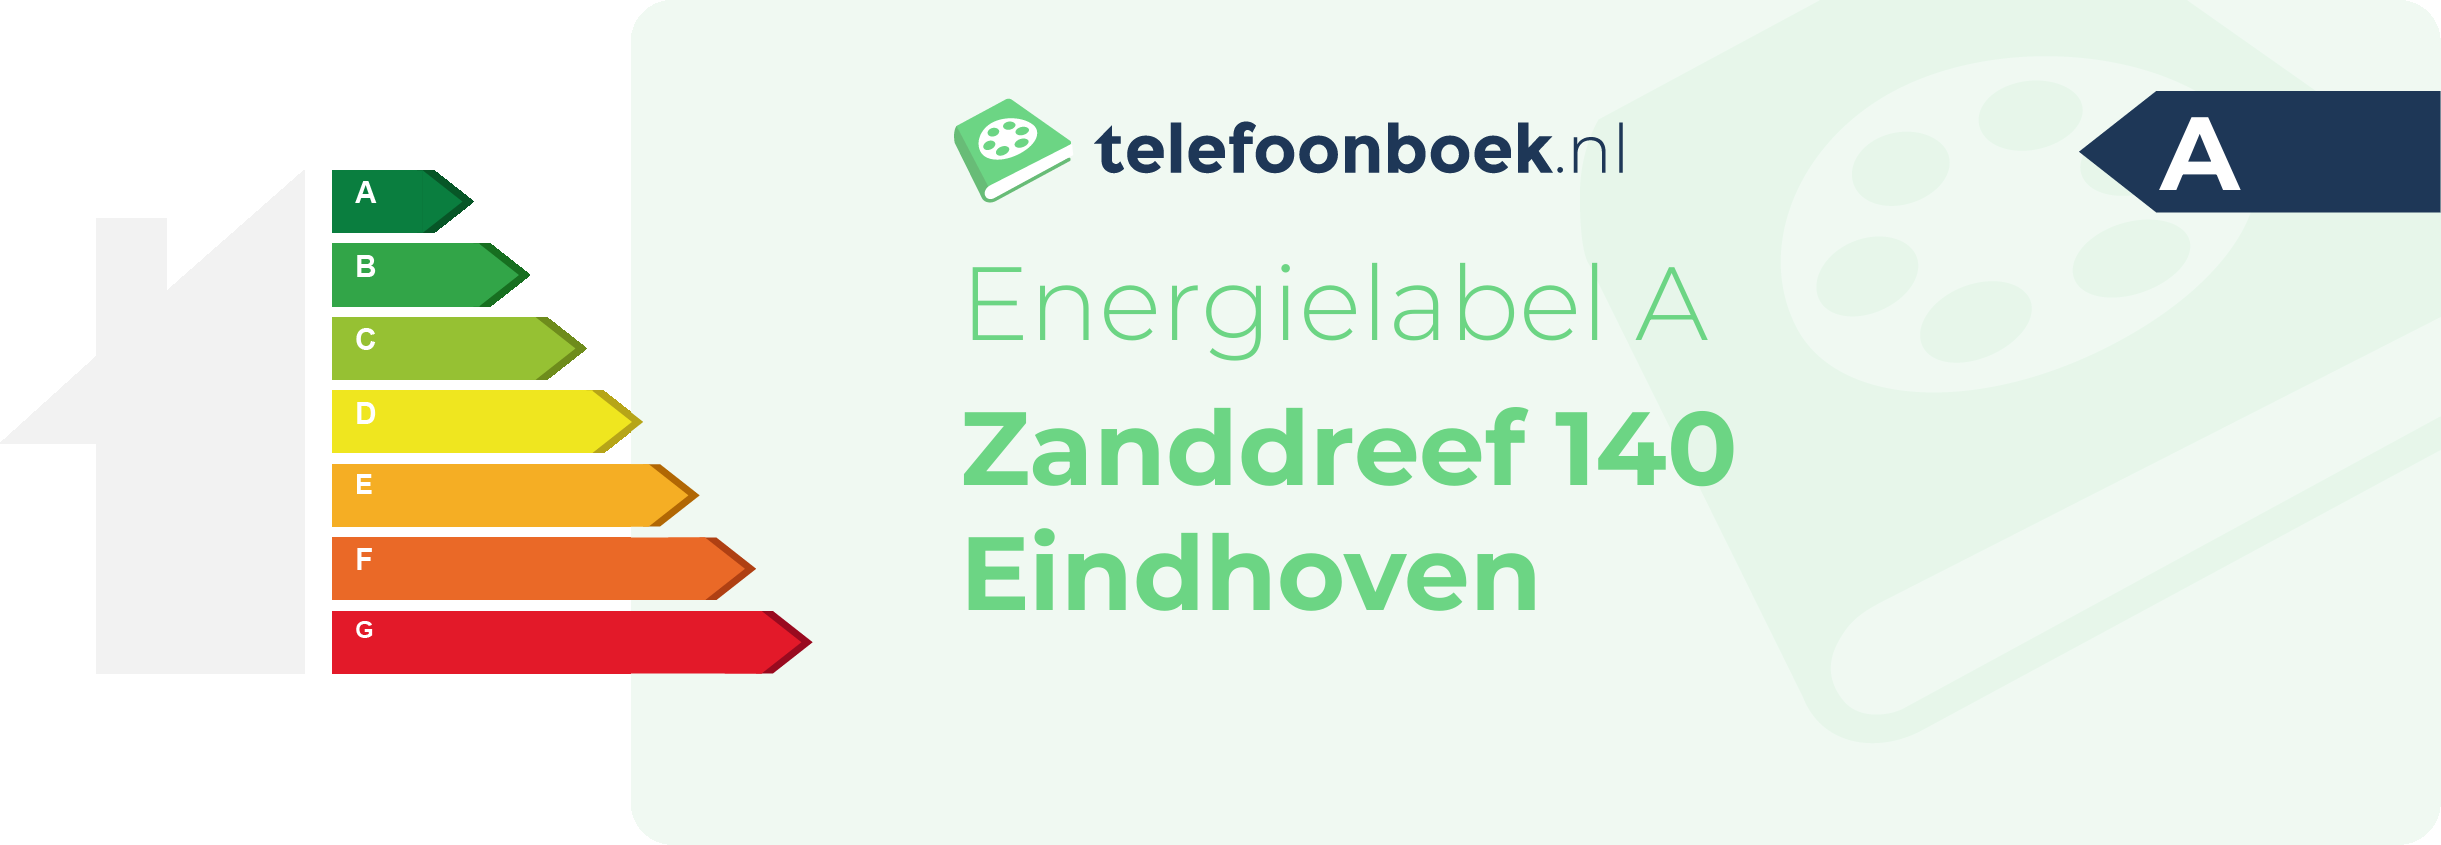 Energielabel Zanddreef 140 Eindhoven